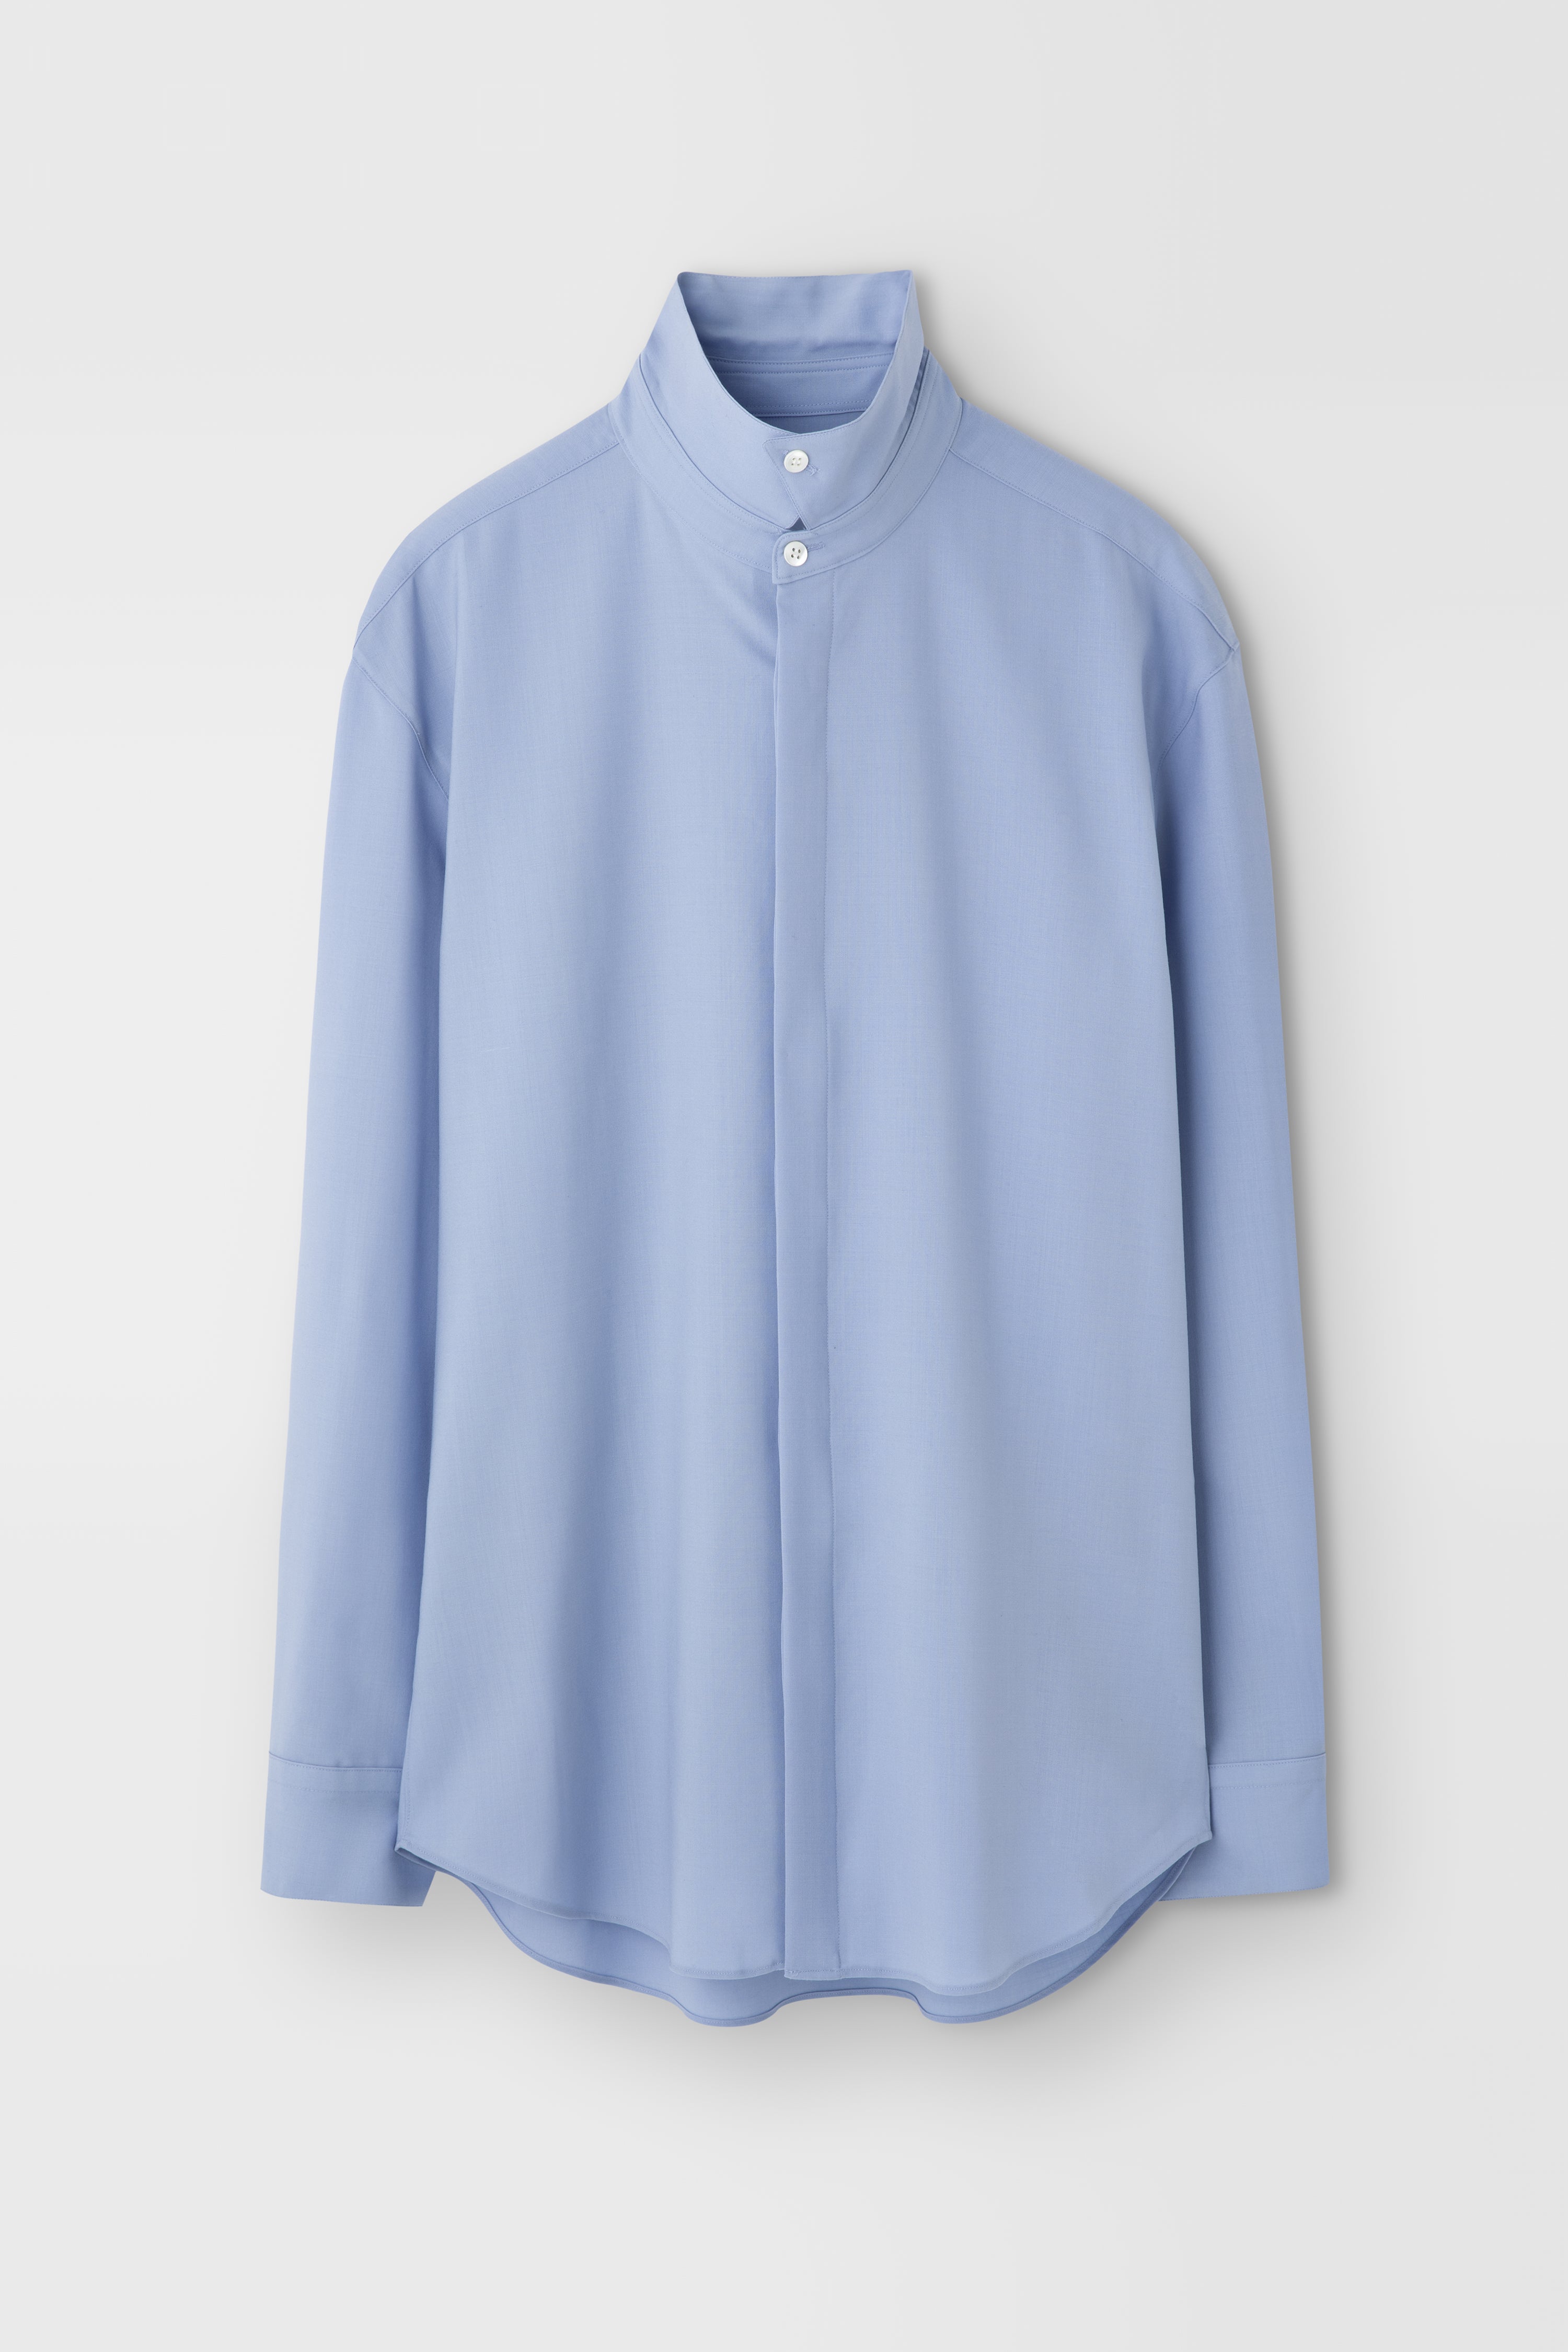 Classic Wool Shirt in Saxe Blue